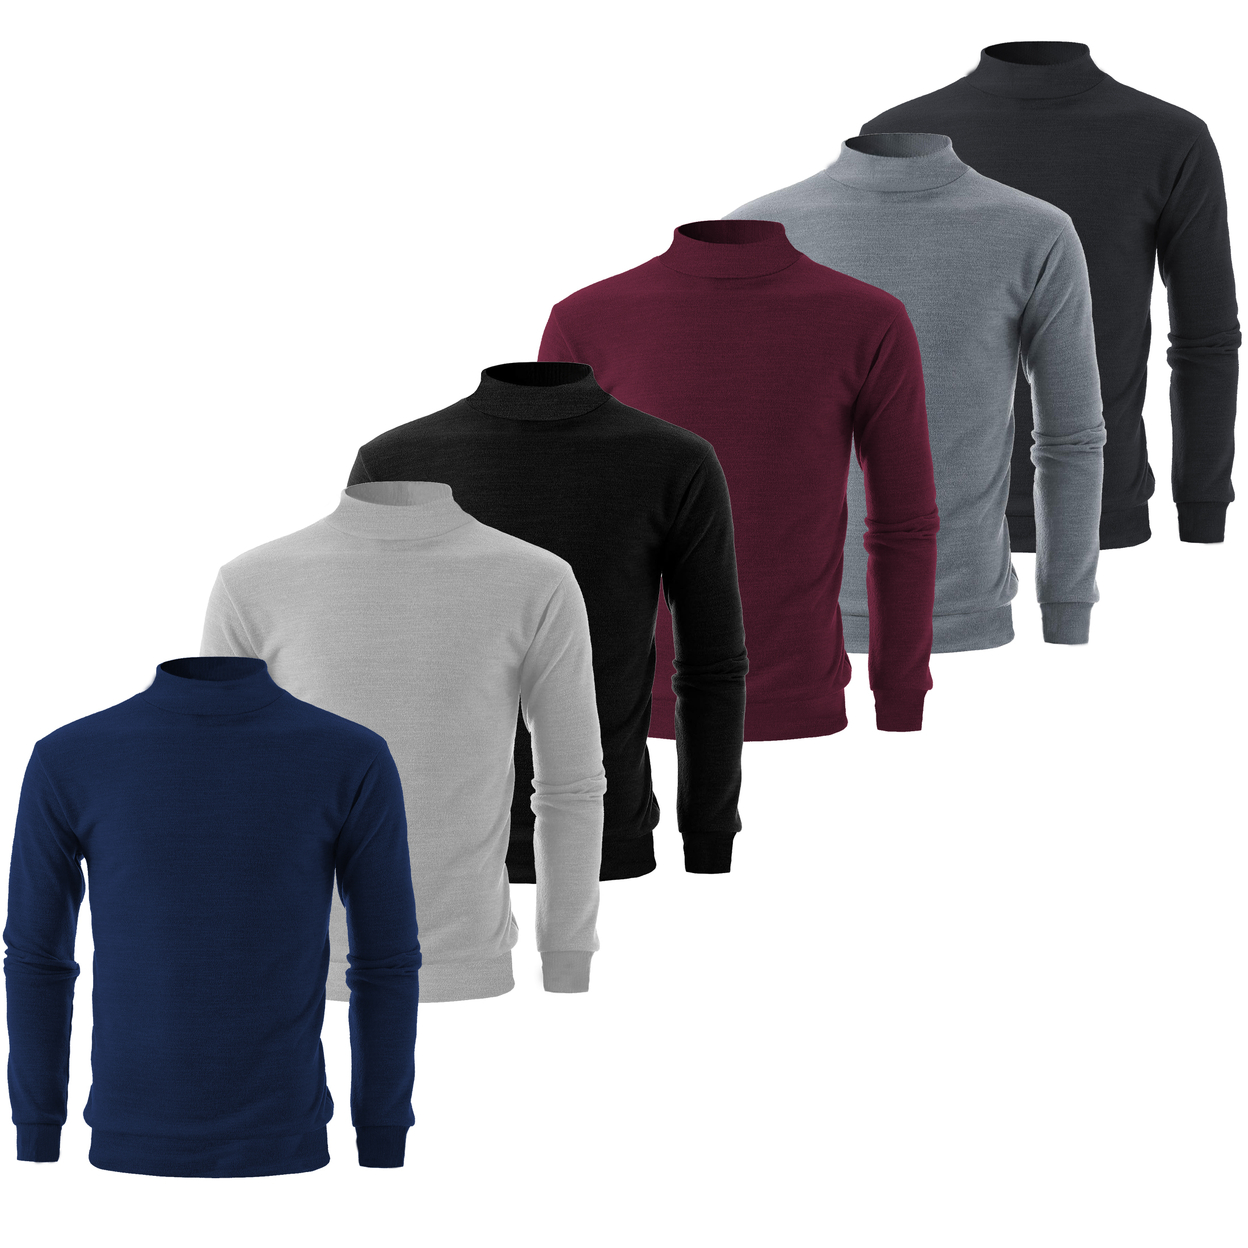 Men's Winter Warm Cozy Knit Slim-Fit Mock Neck Sweater - Charcoal, X-large